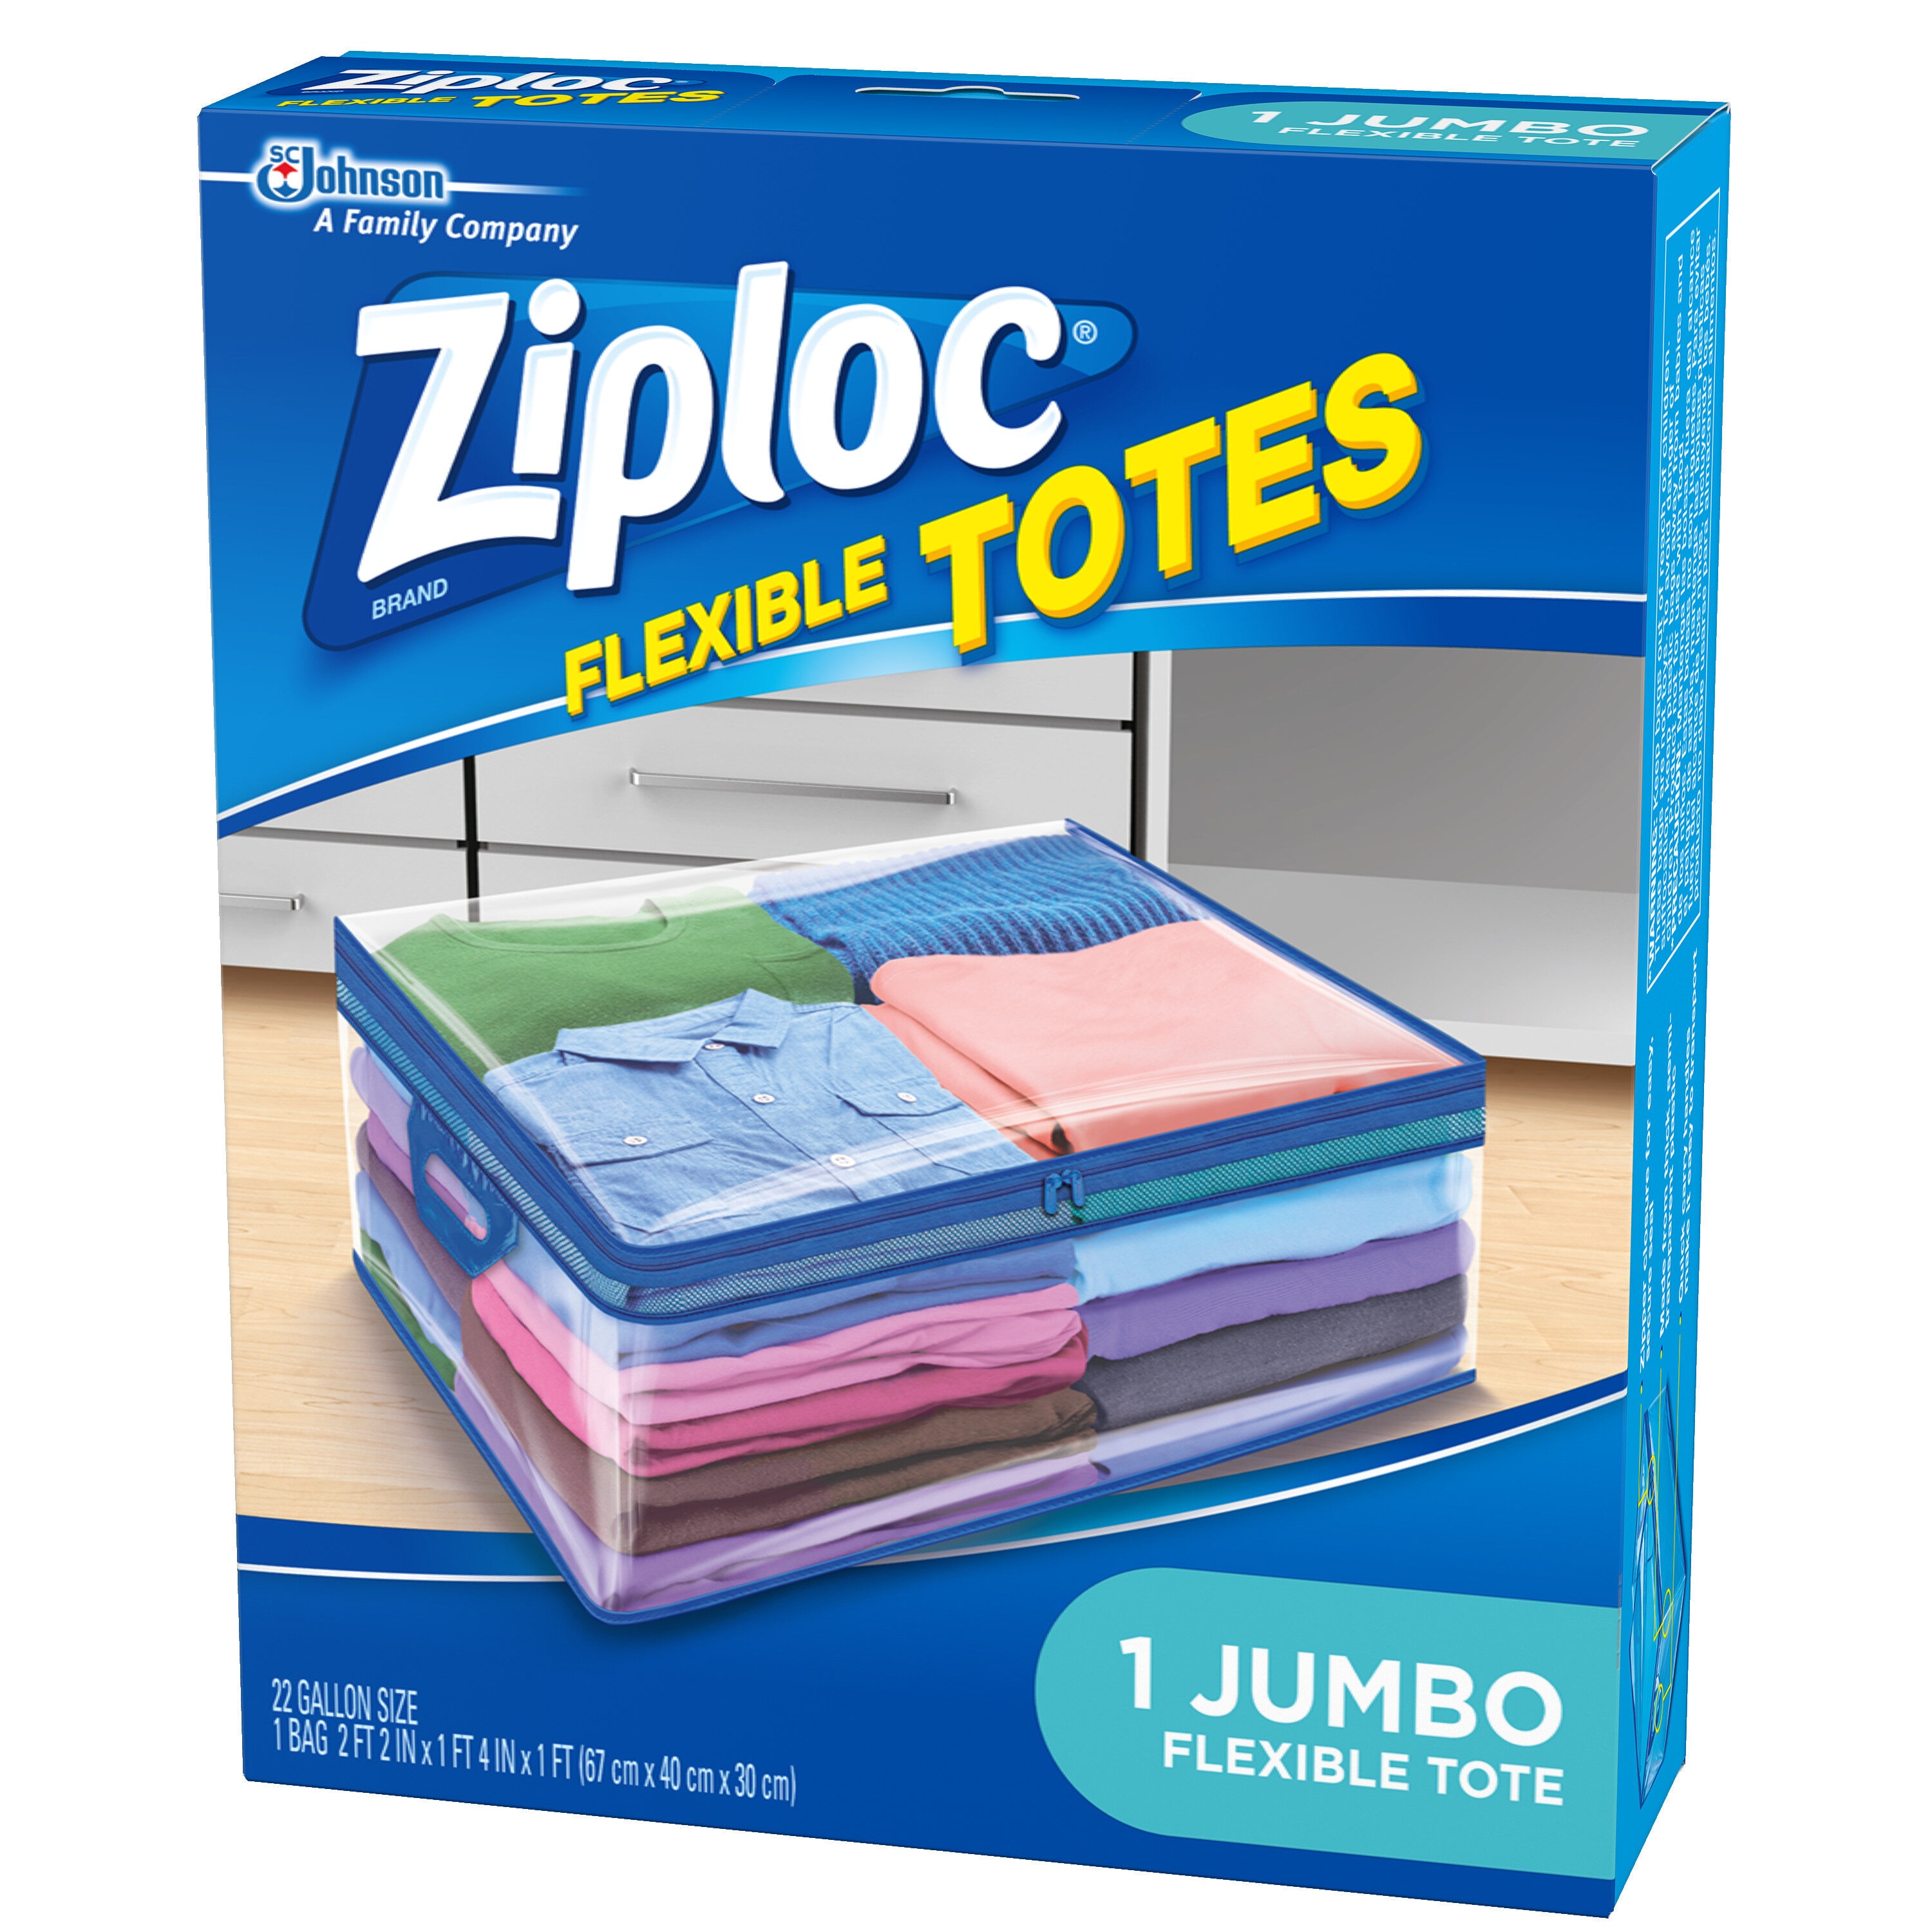 Ziploc Flex Totes 1-Count 22-Gallon (s) Storage Bags in the